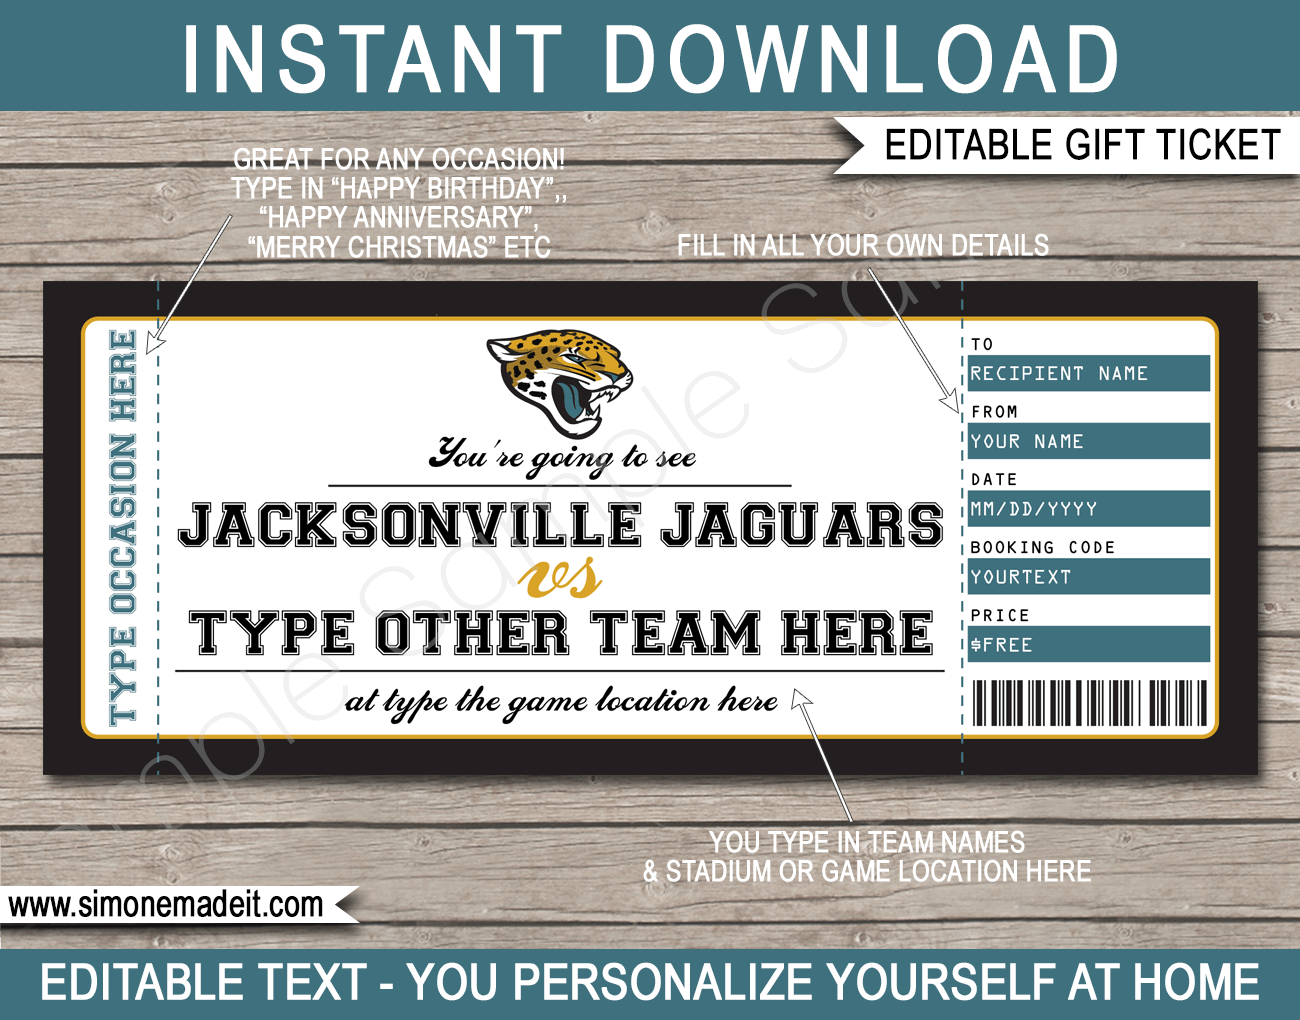 jacksonville jaguars ticket prices